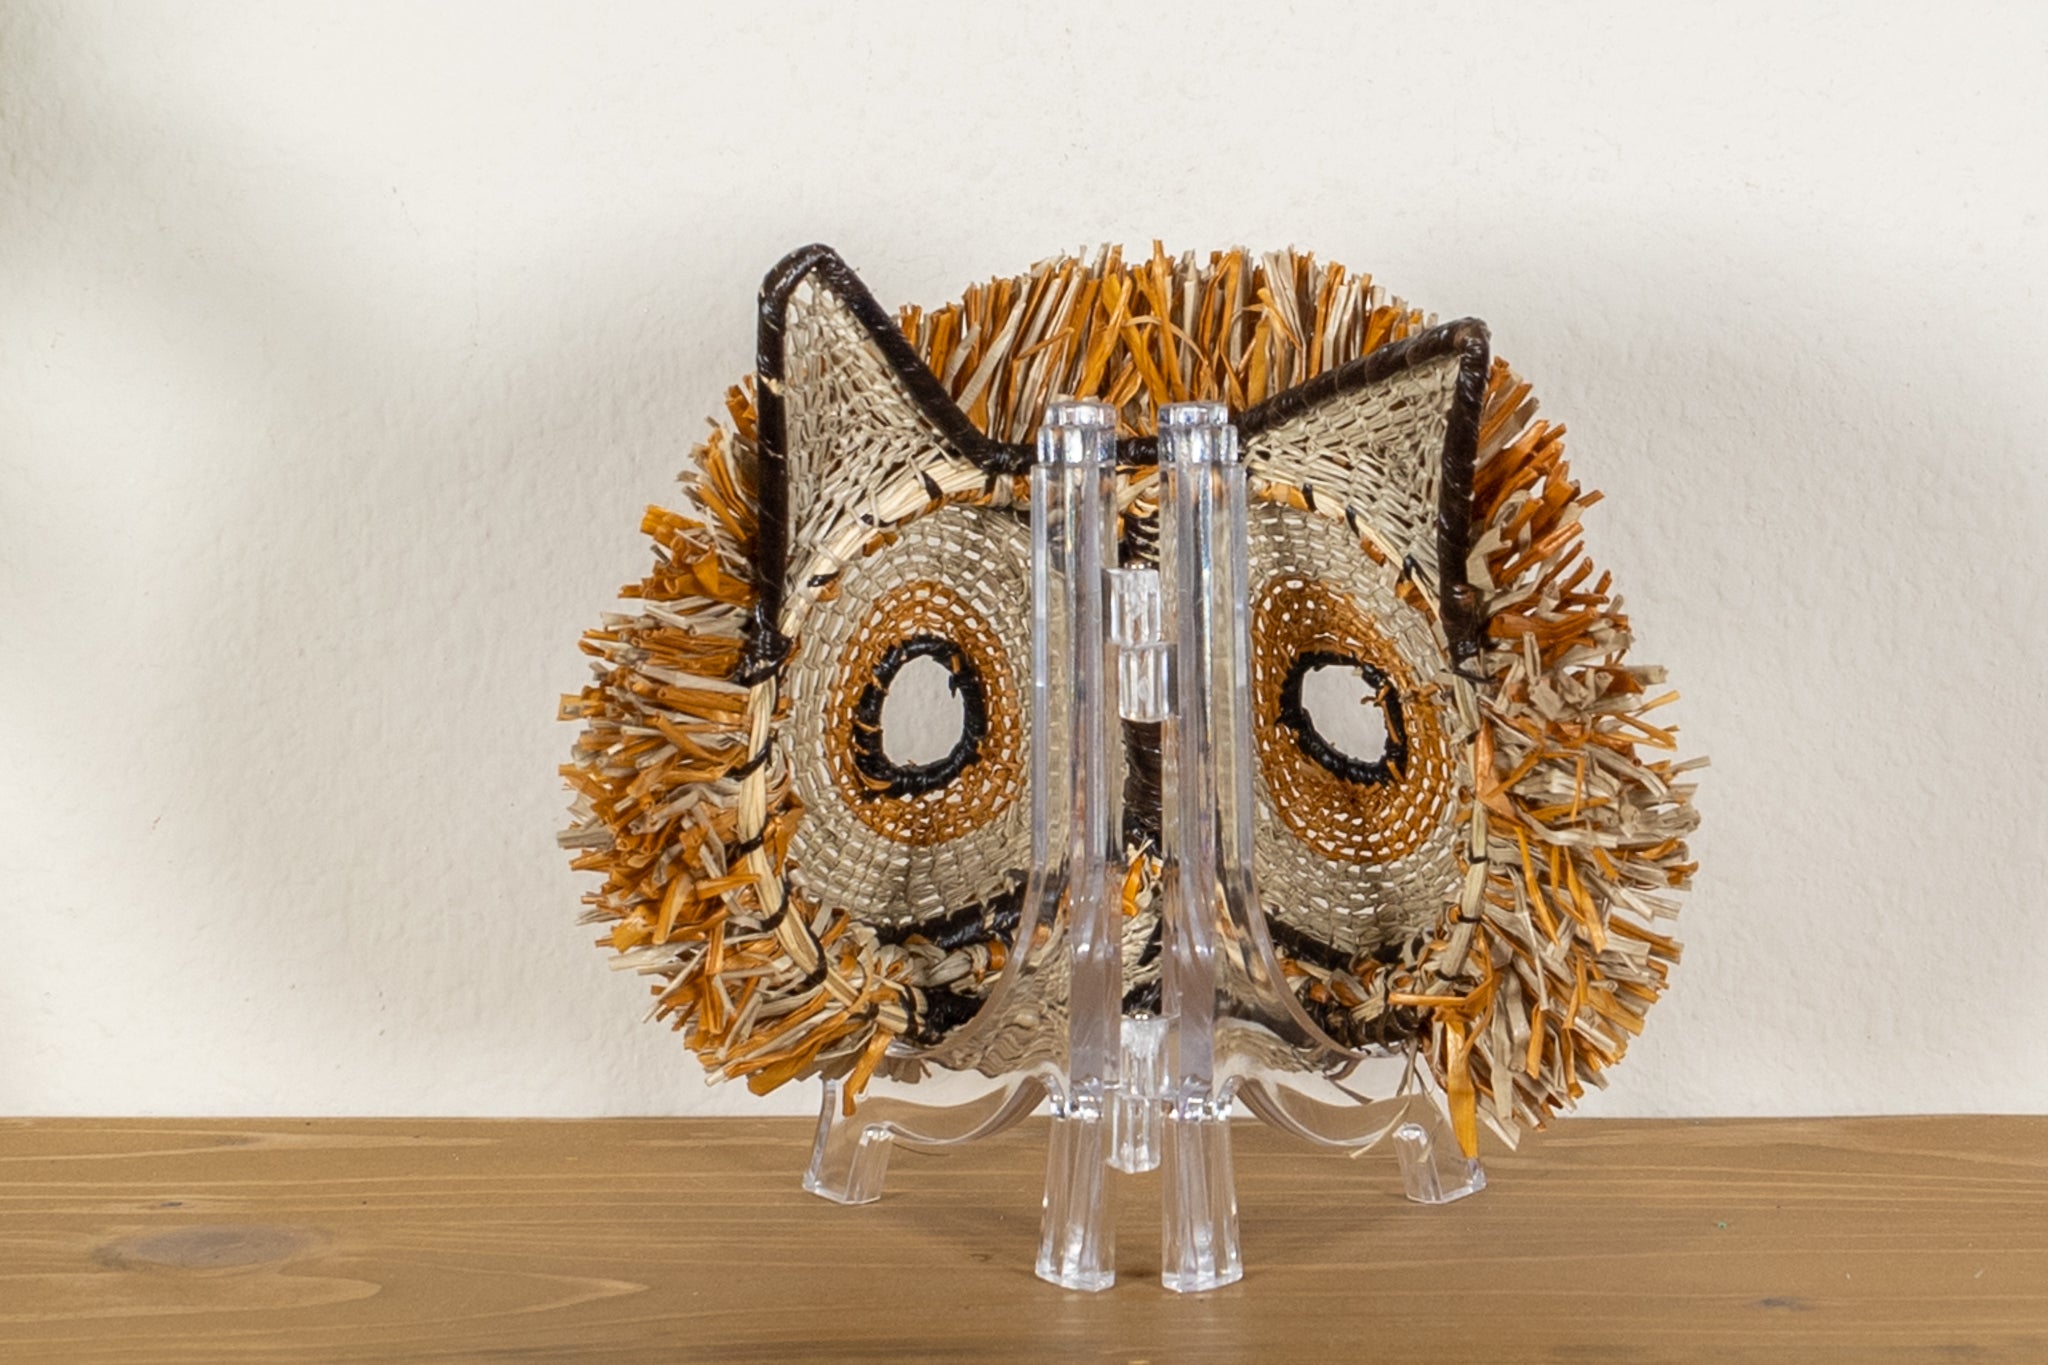 Gold Molasses Owl Mask